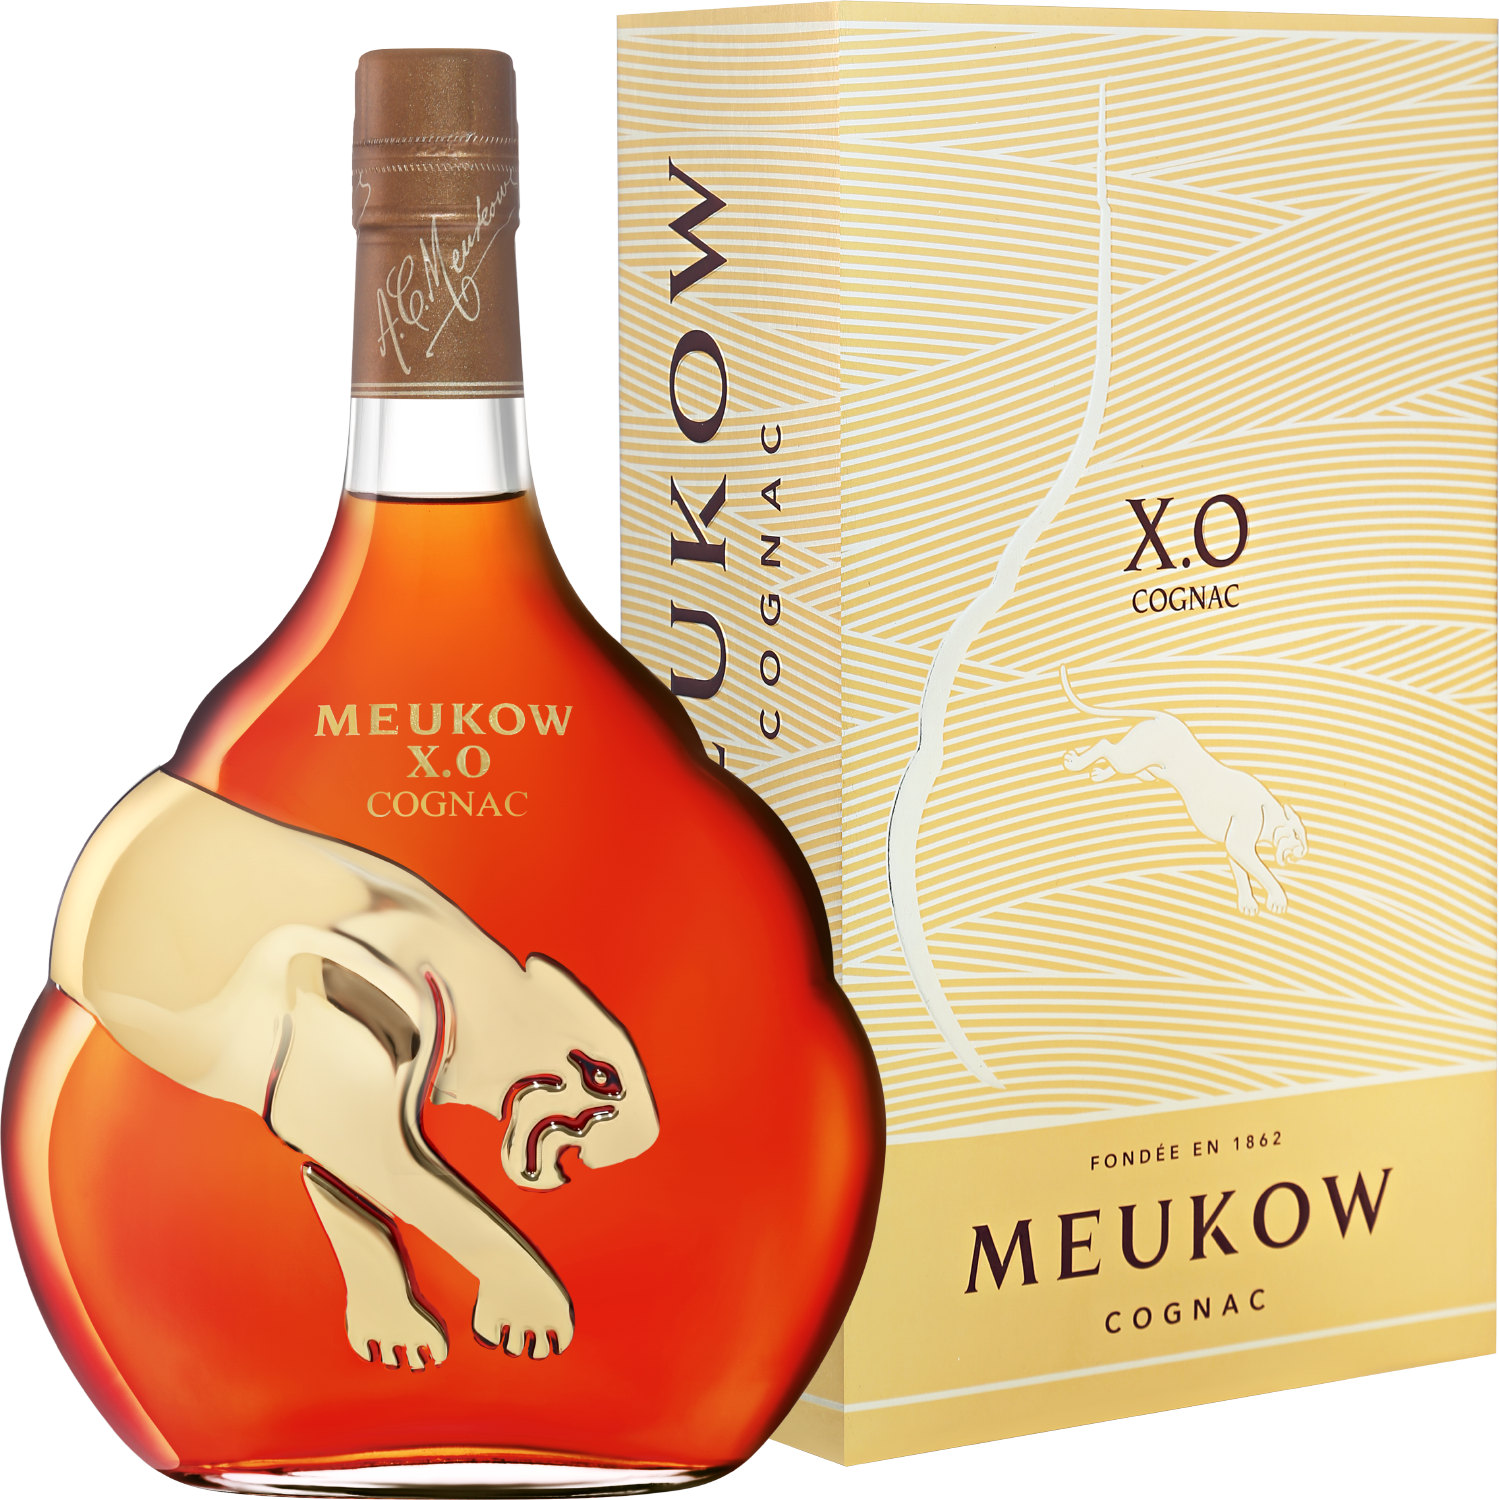 Meukow Cognac XO (gift box)